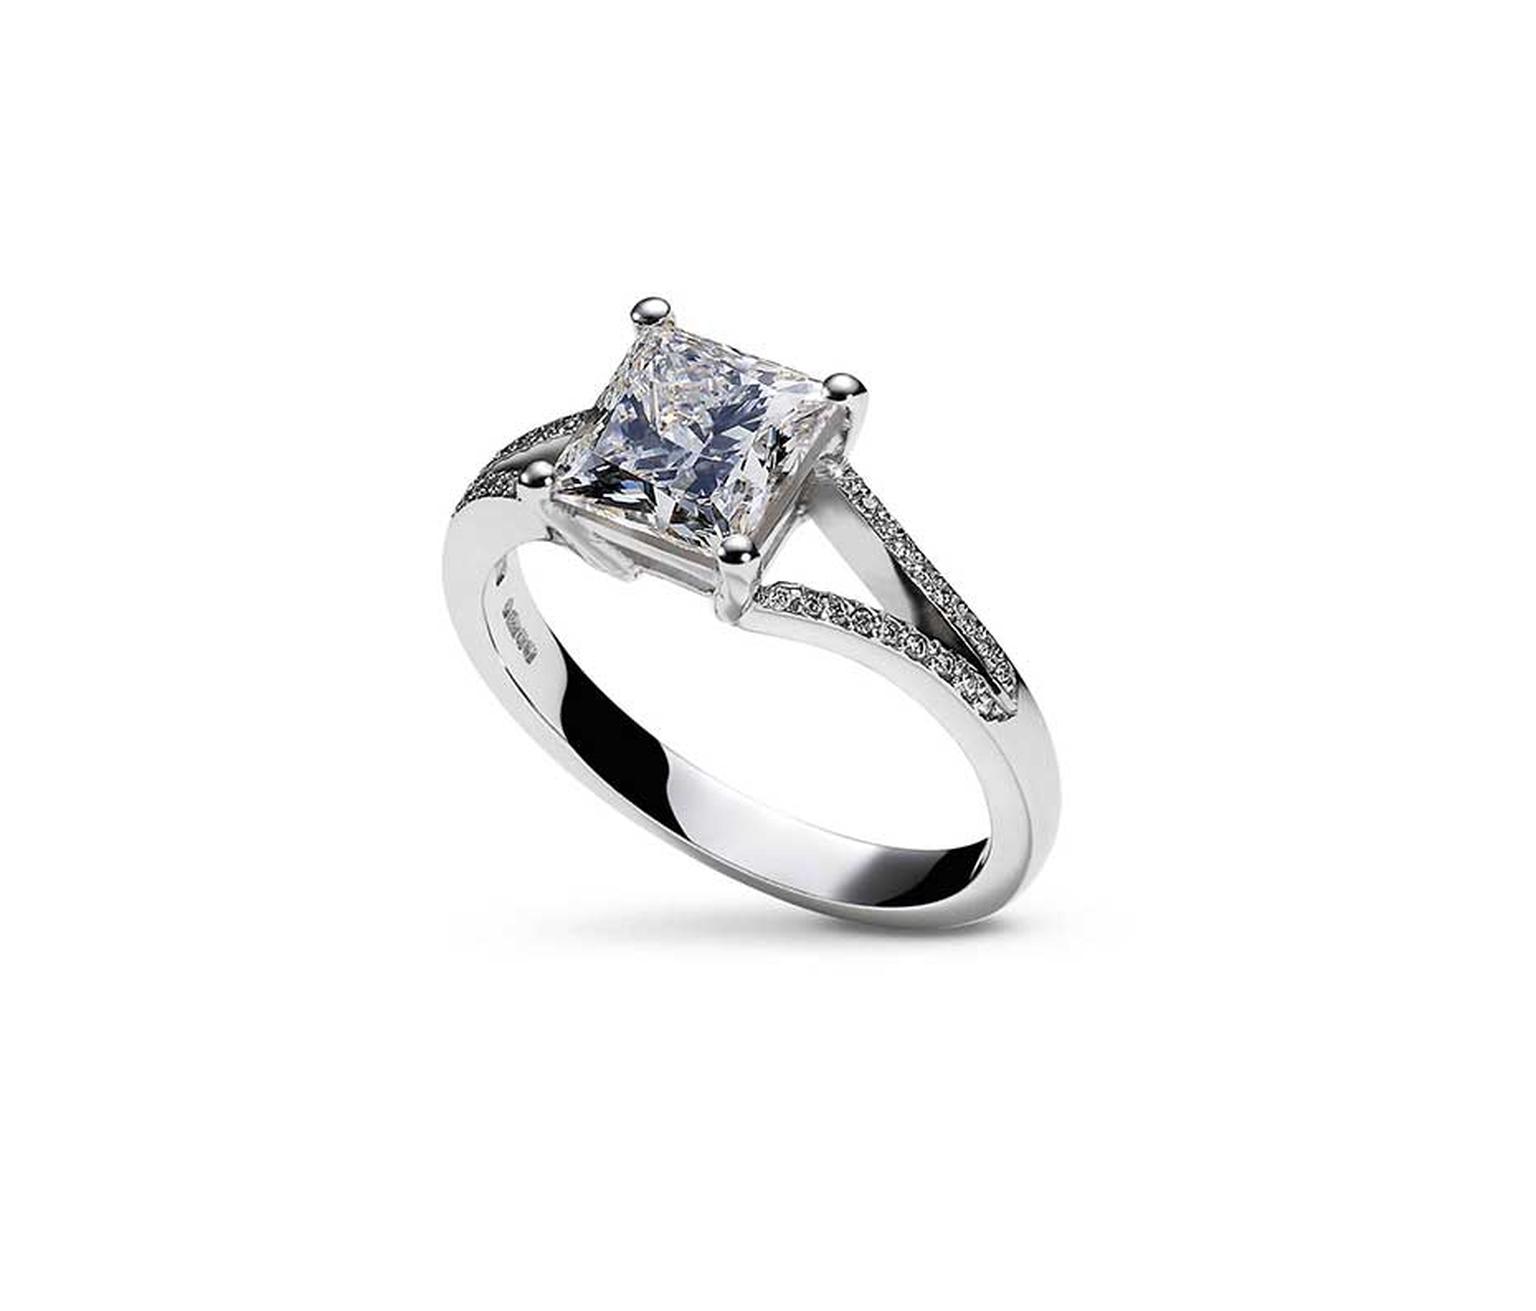 William & Son princess-cut diamond engagement ring (£17,600).